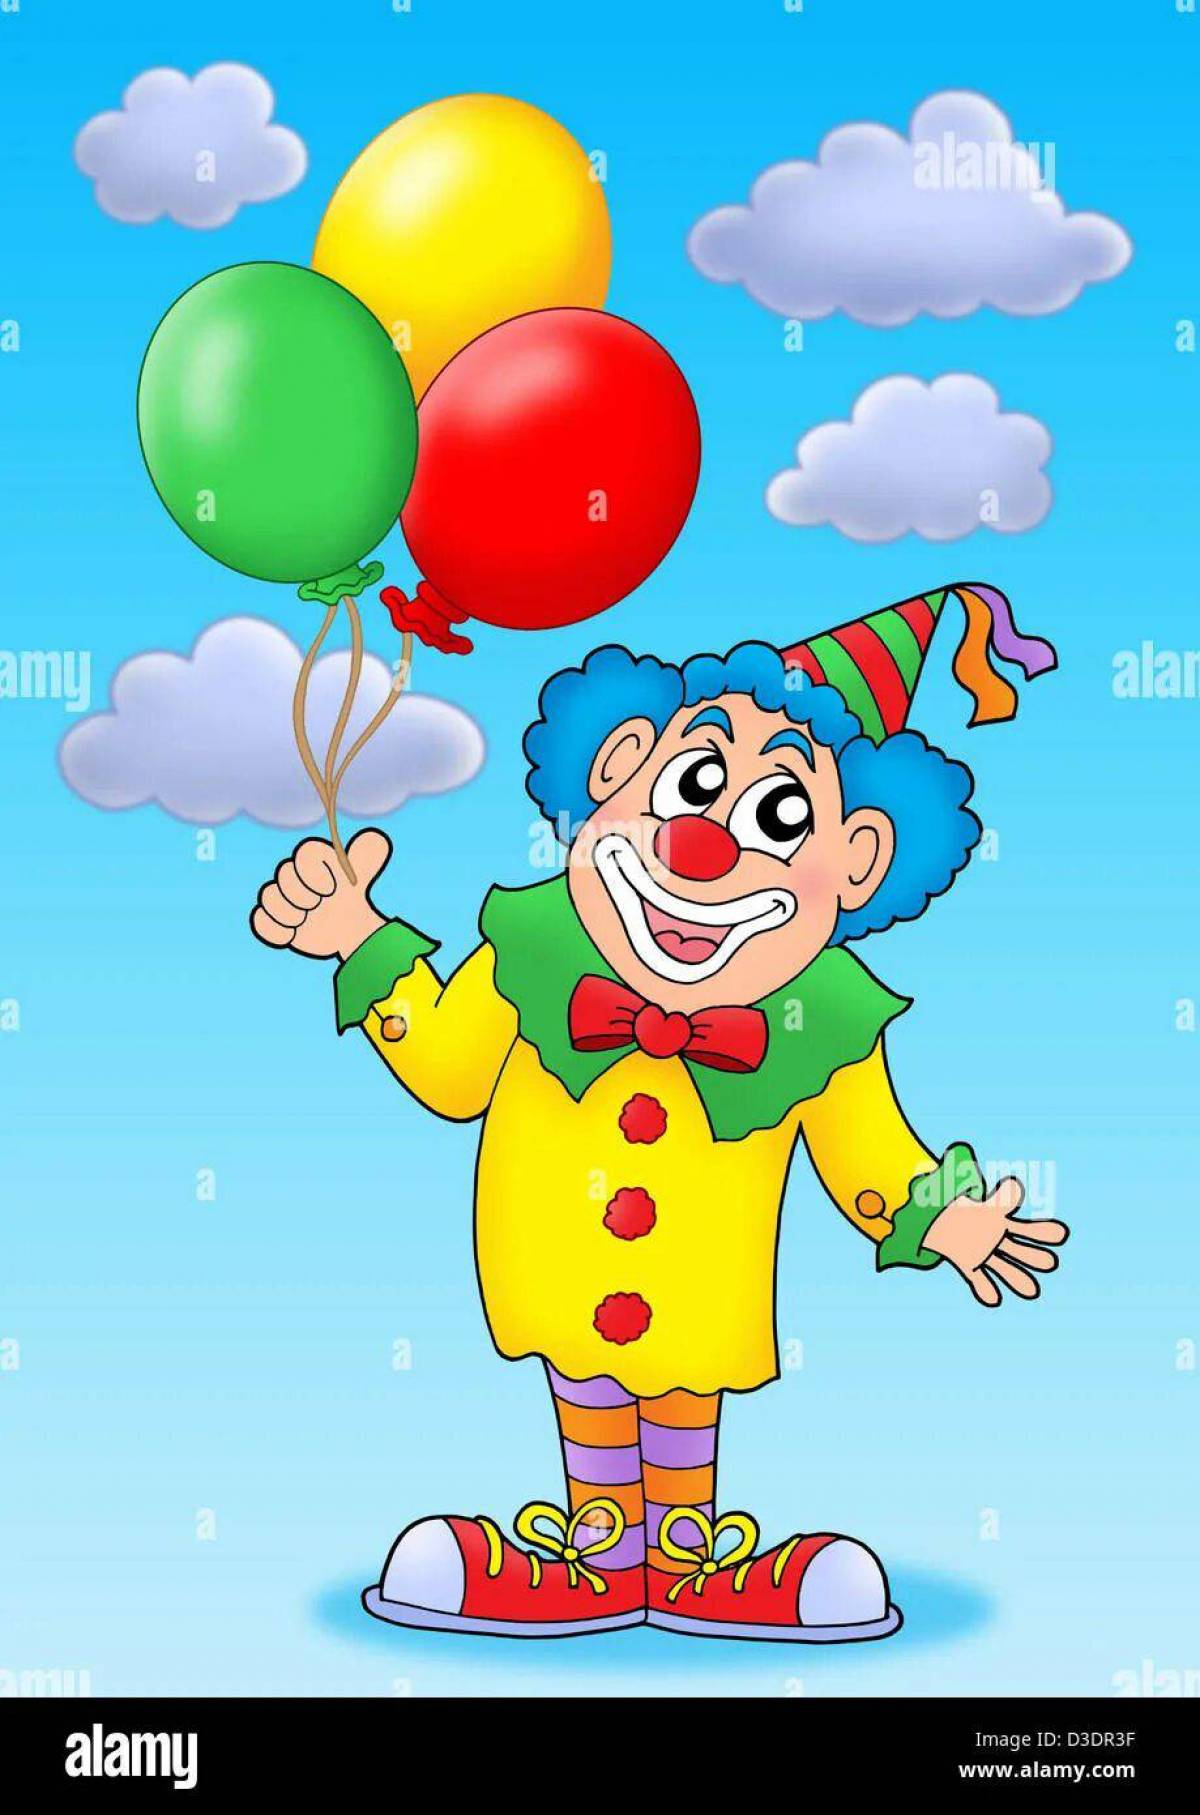 Клоун с шарами. Клоун с воздушными шарами. Клоун с шариками. Клоун с шариками рисунок. Иллюстрация клоуна с шариками.